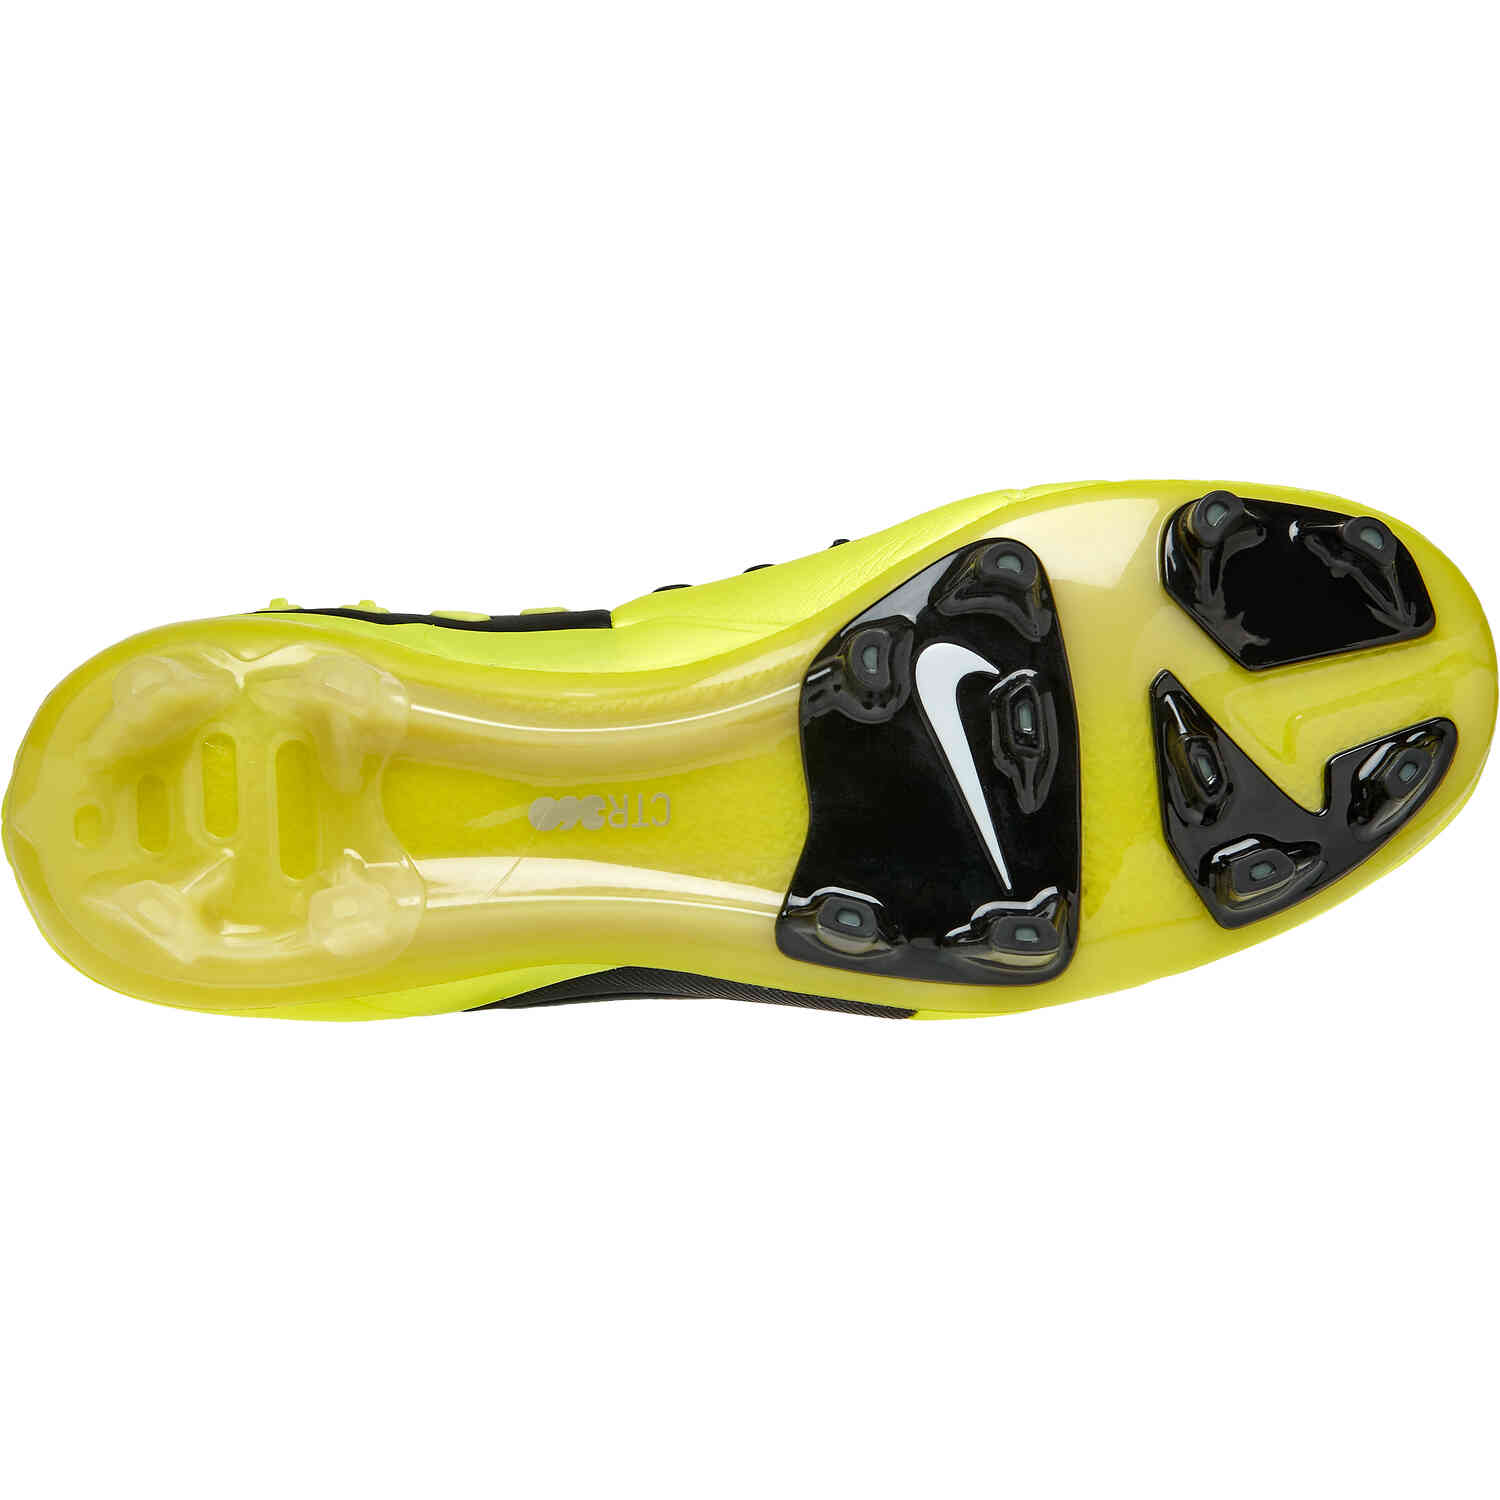 Nike Special Edition CTR360 Maestri III FG – Tour Yellow & Black with White